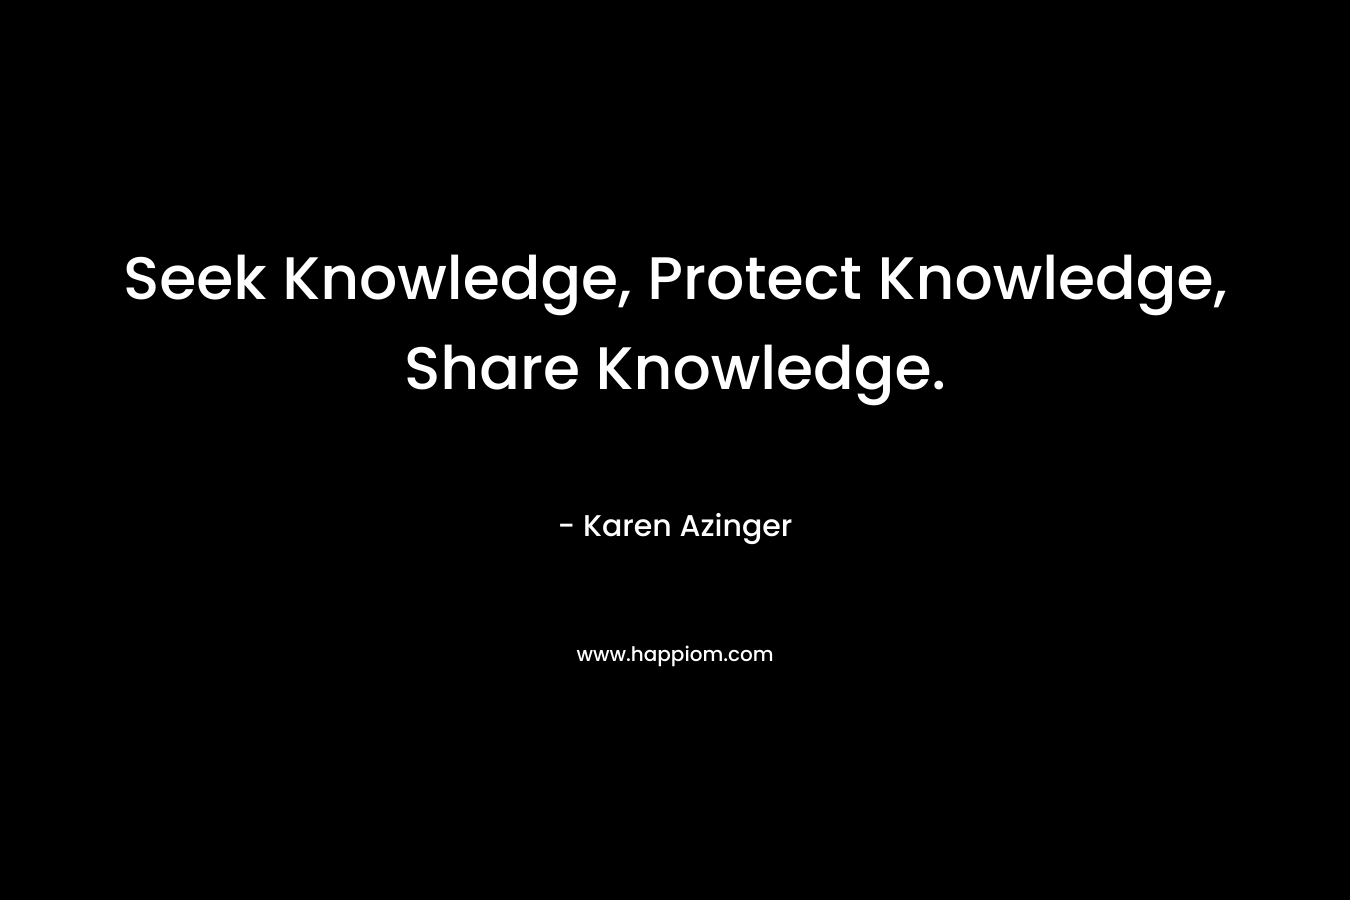 Seek Knowledge, Protect Knowledge, Share Knowledge.